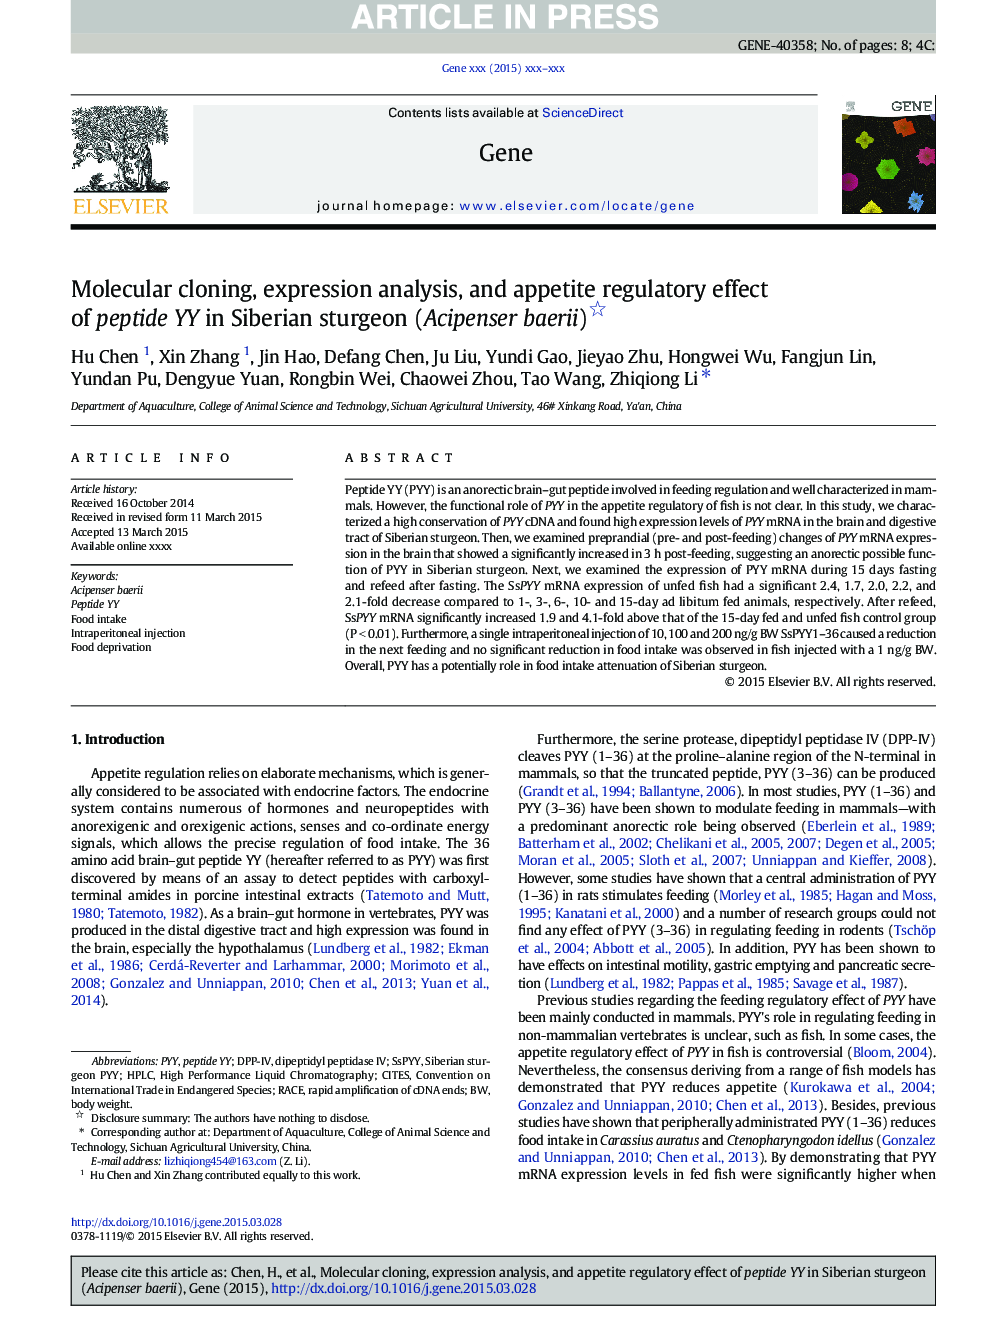 Molecular cloning, expression analysis, and appetite regulatory effect of peptide YY in Siberian sturgeon (Acipenser baerii)